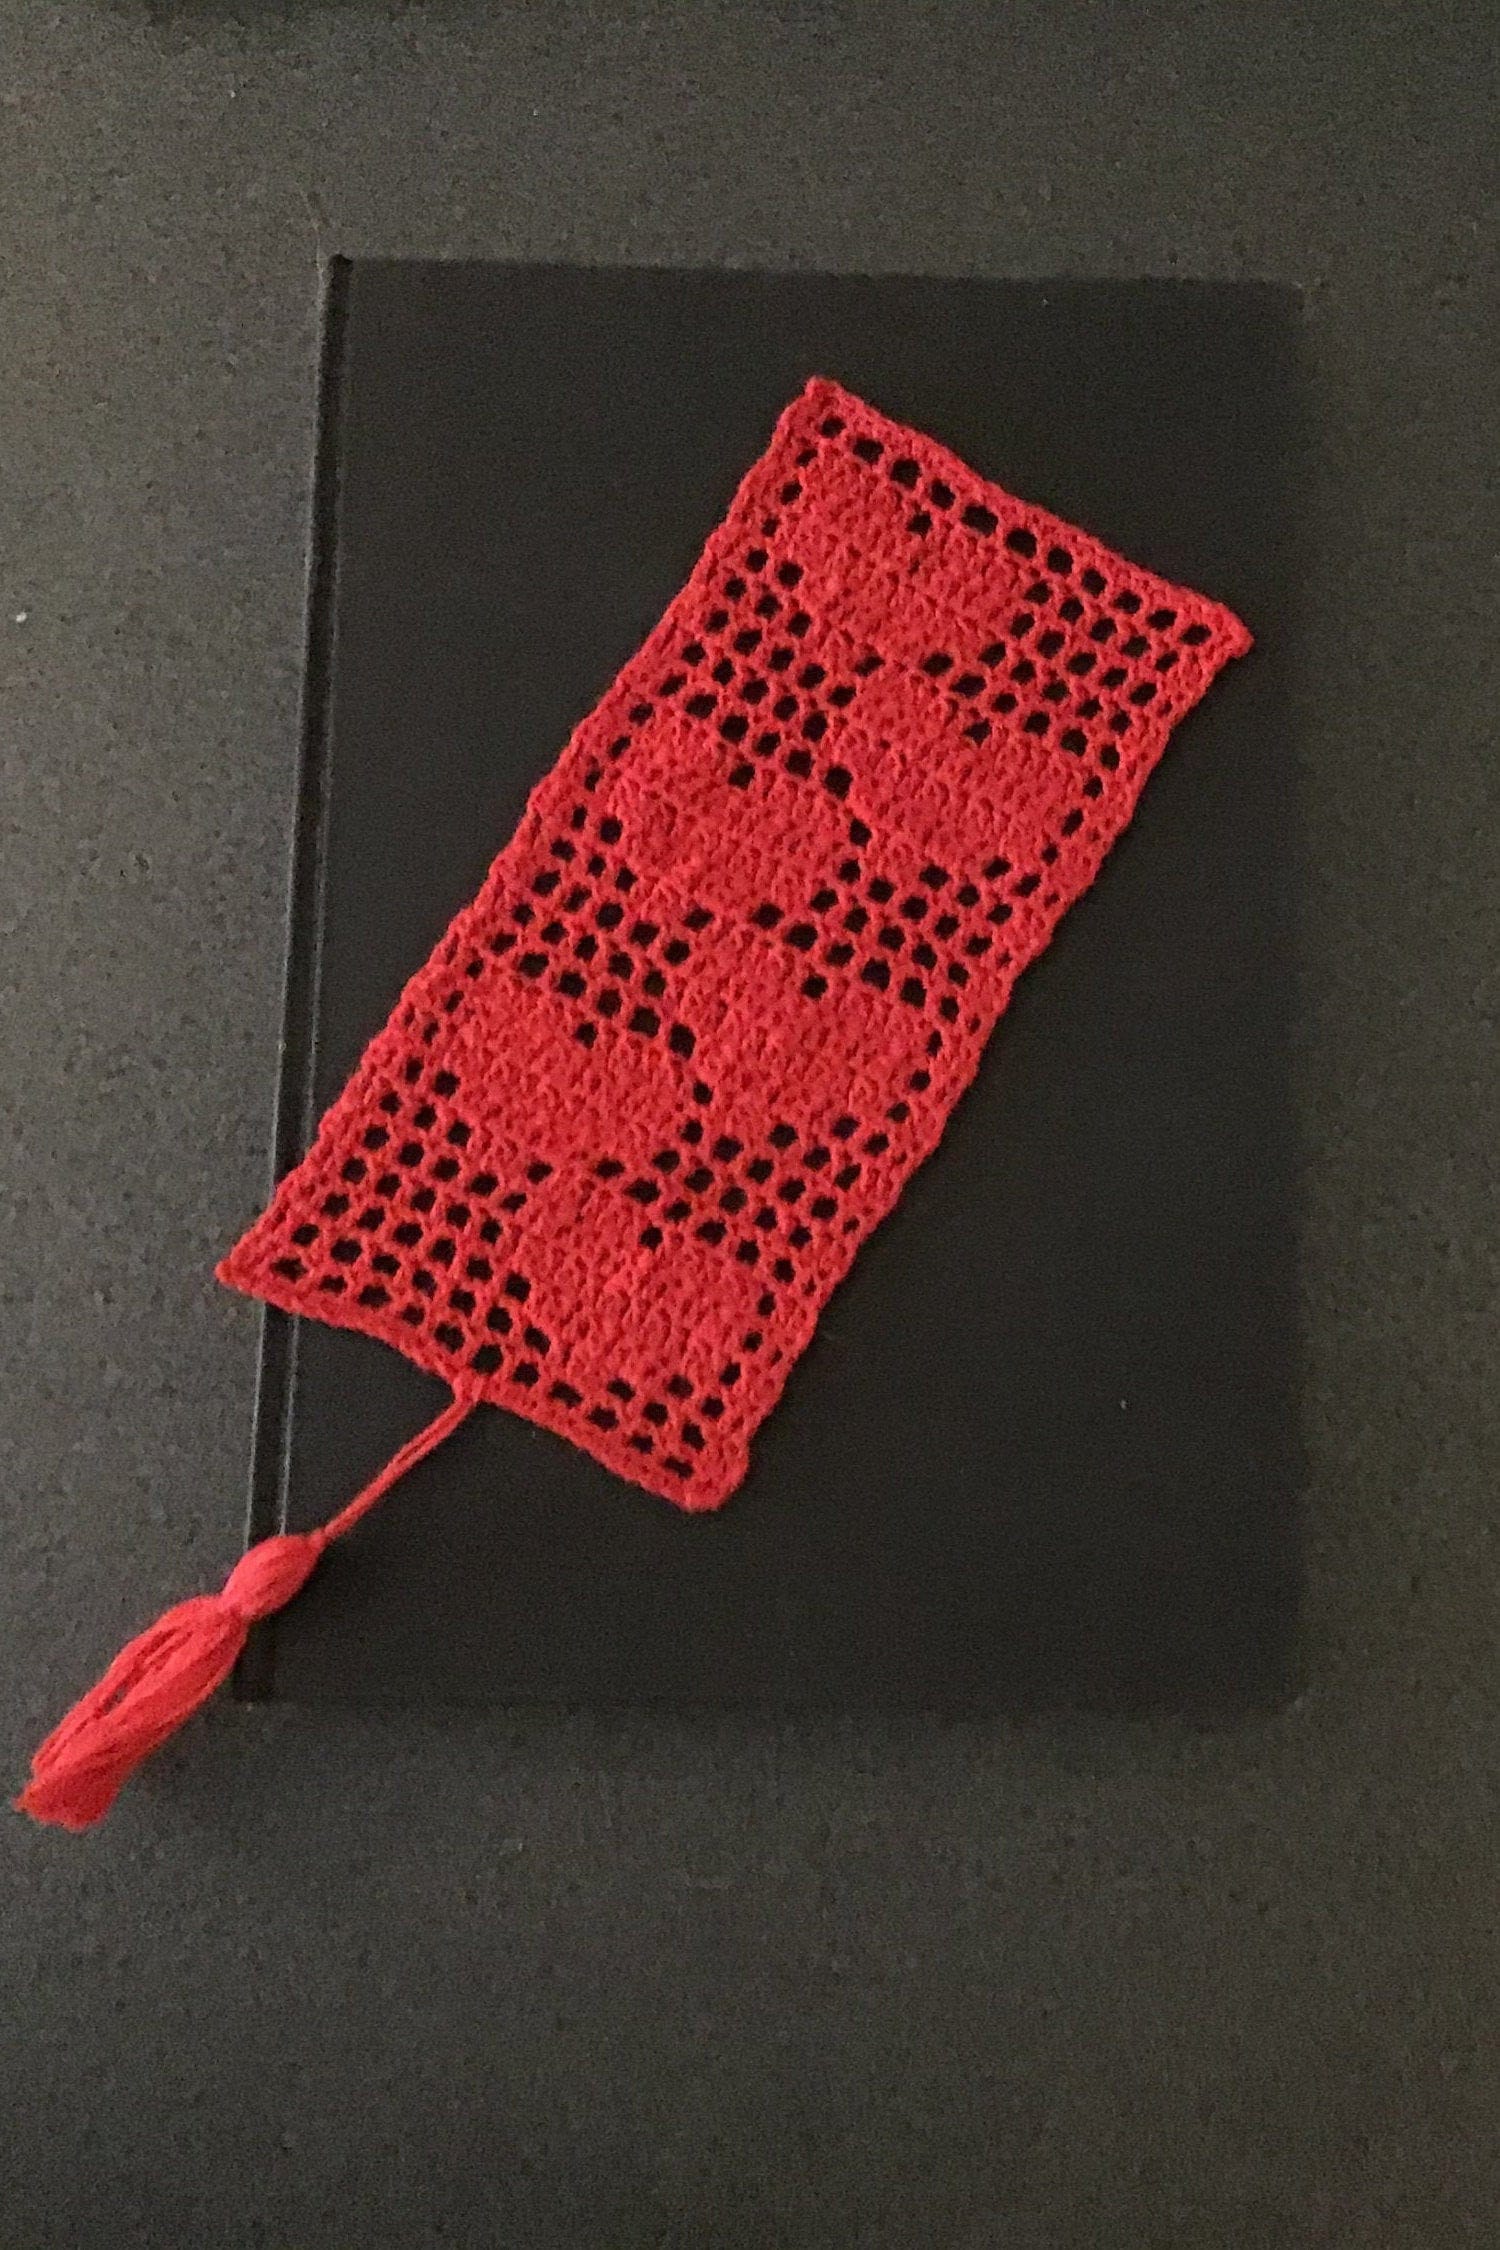 Zaailing Sportschool Dubbelzinnig In Filet Crochet Red Bookmark With Hearts. - Etsy